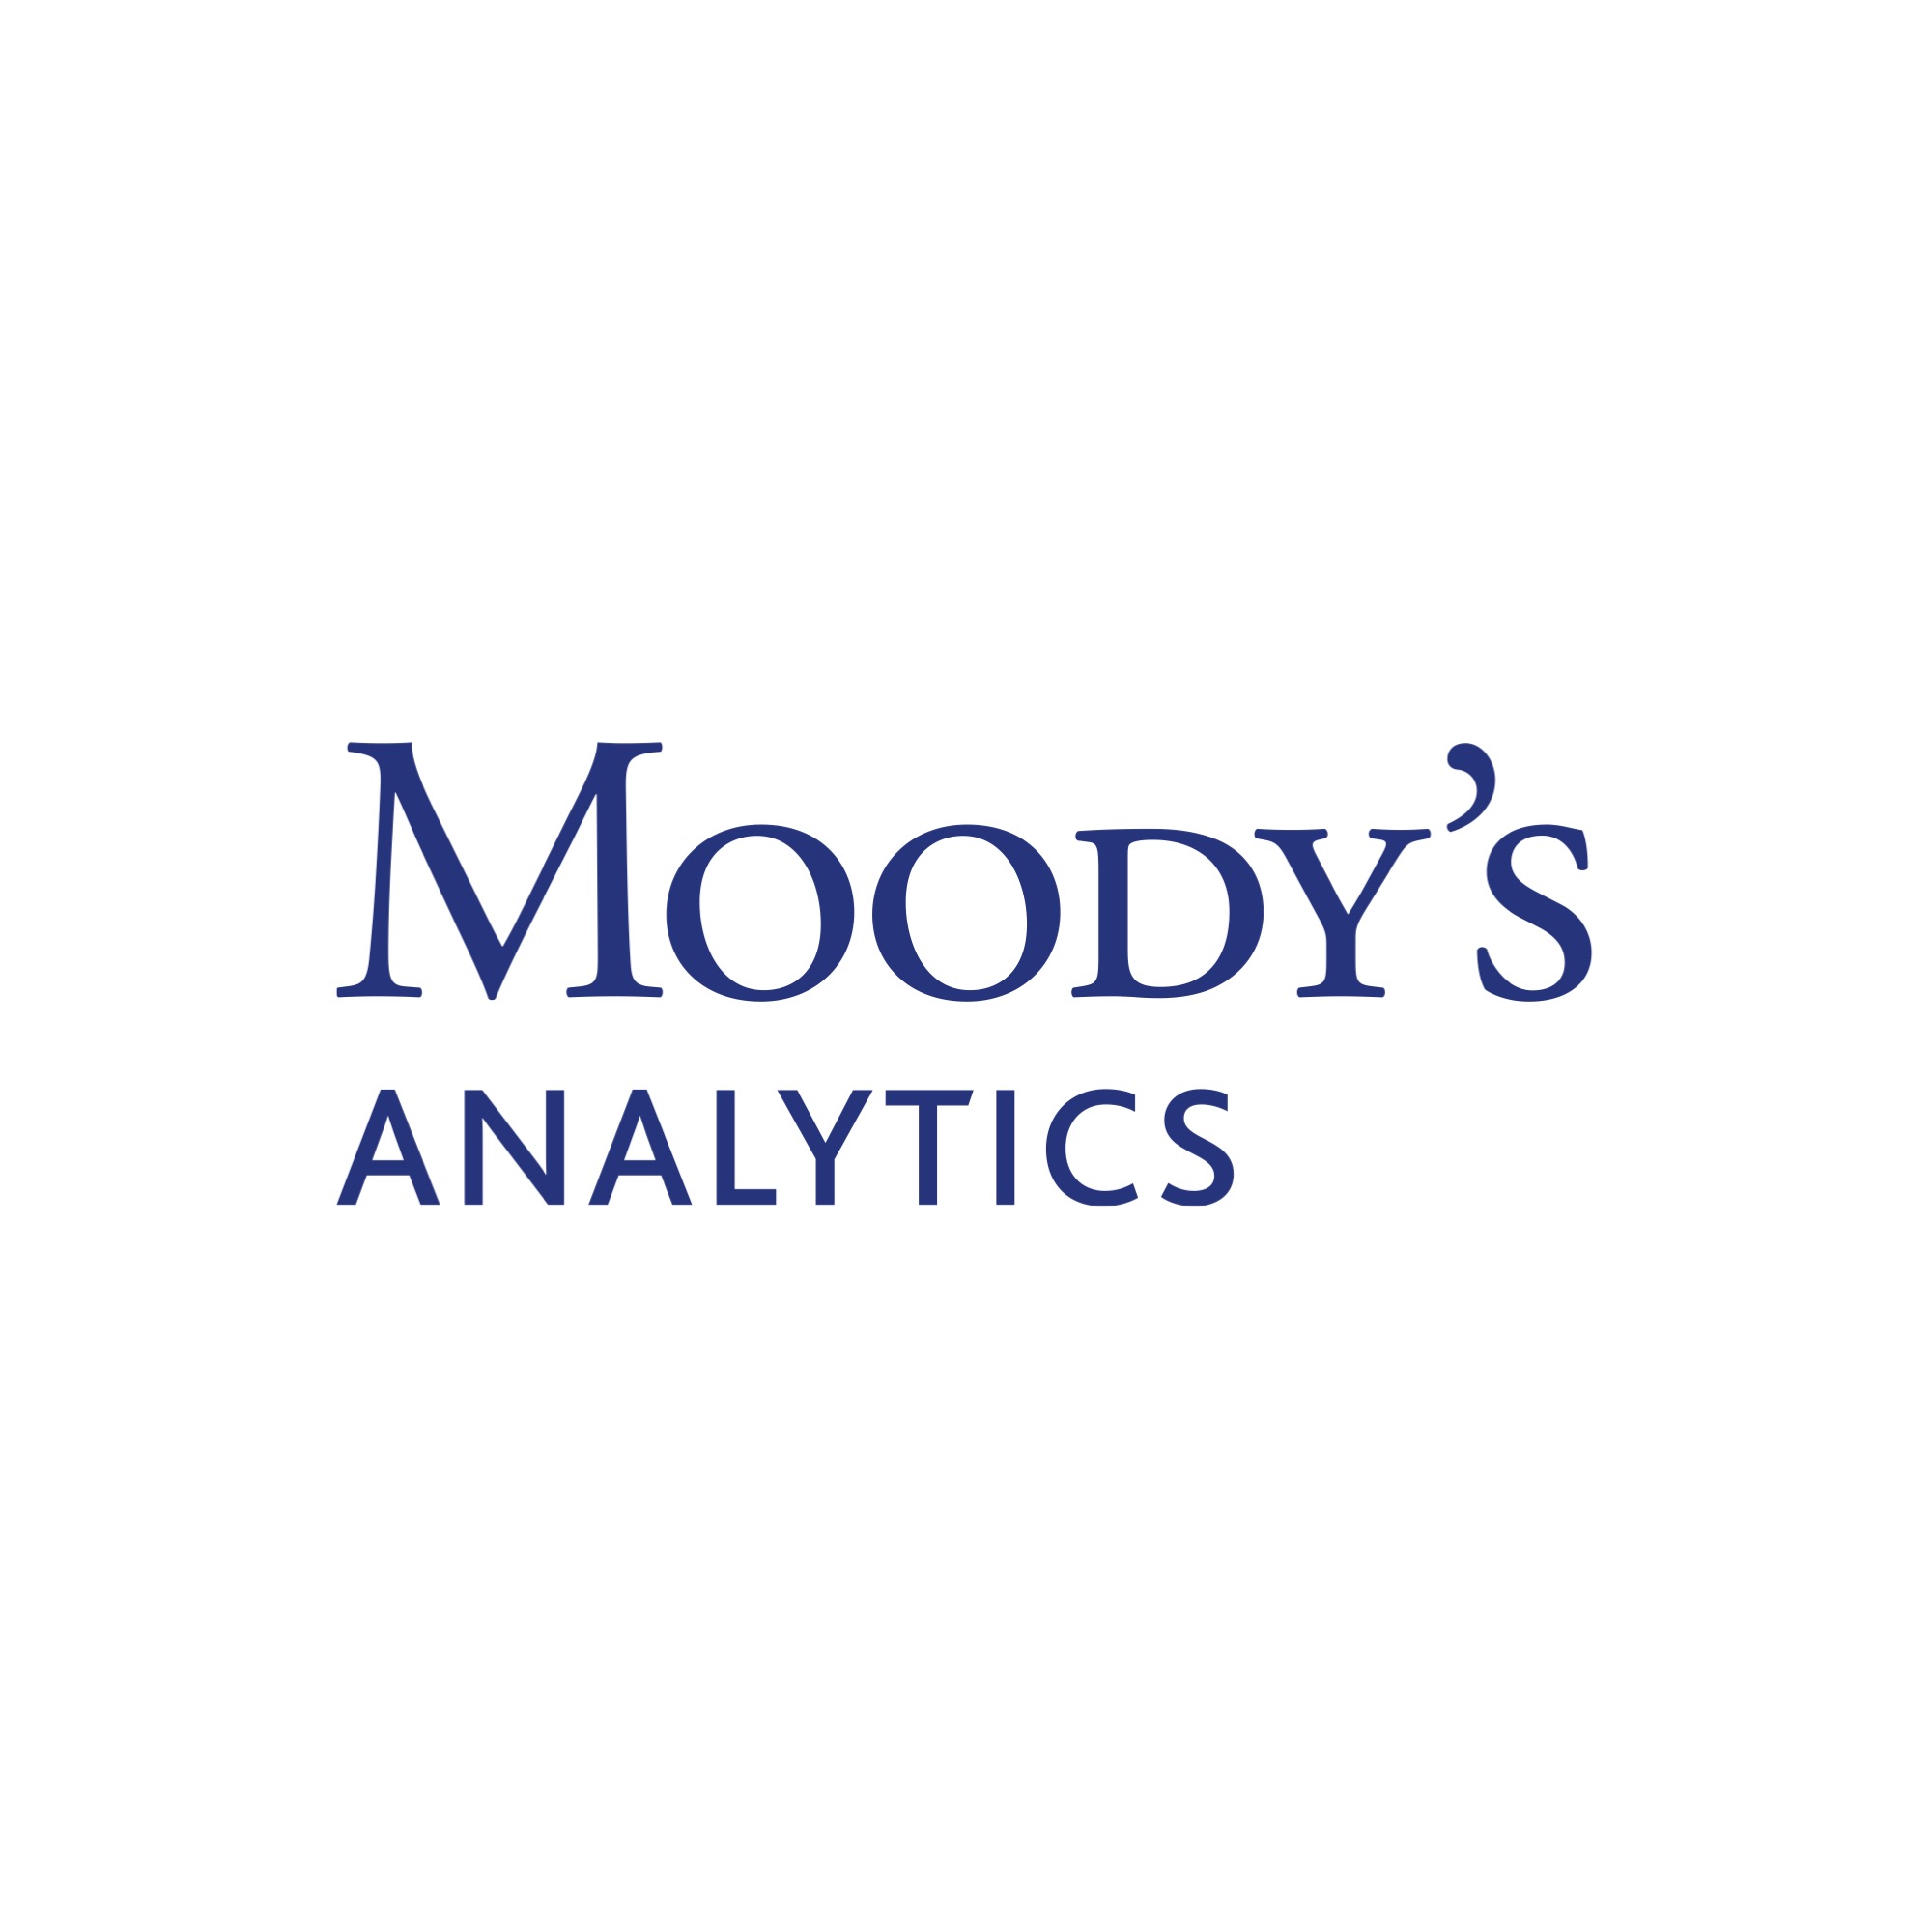 MOODY'S ANALYTICS - Supervision, Risks & Profitability